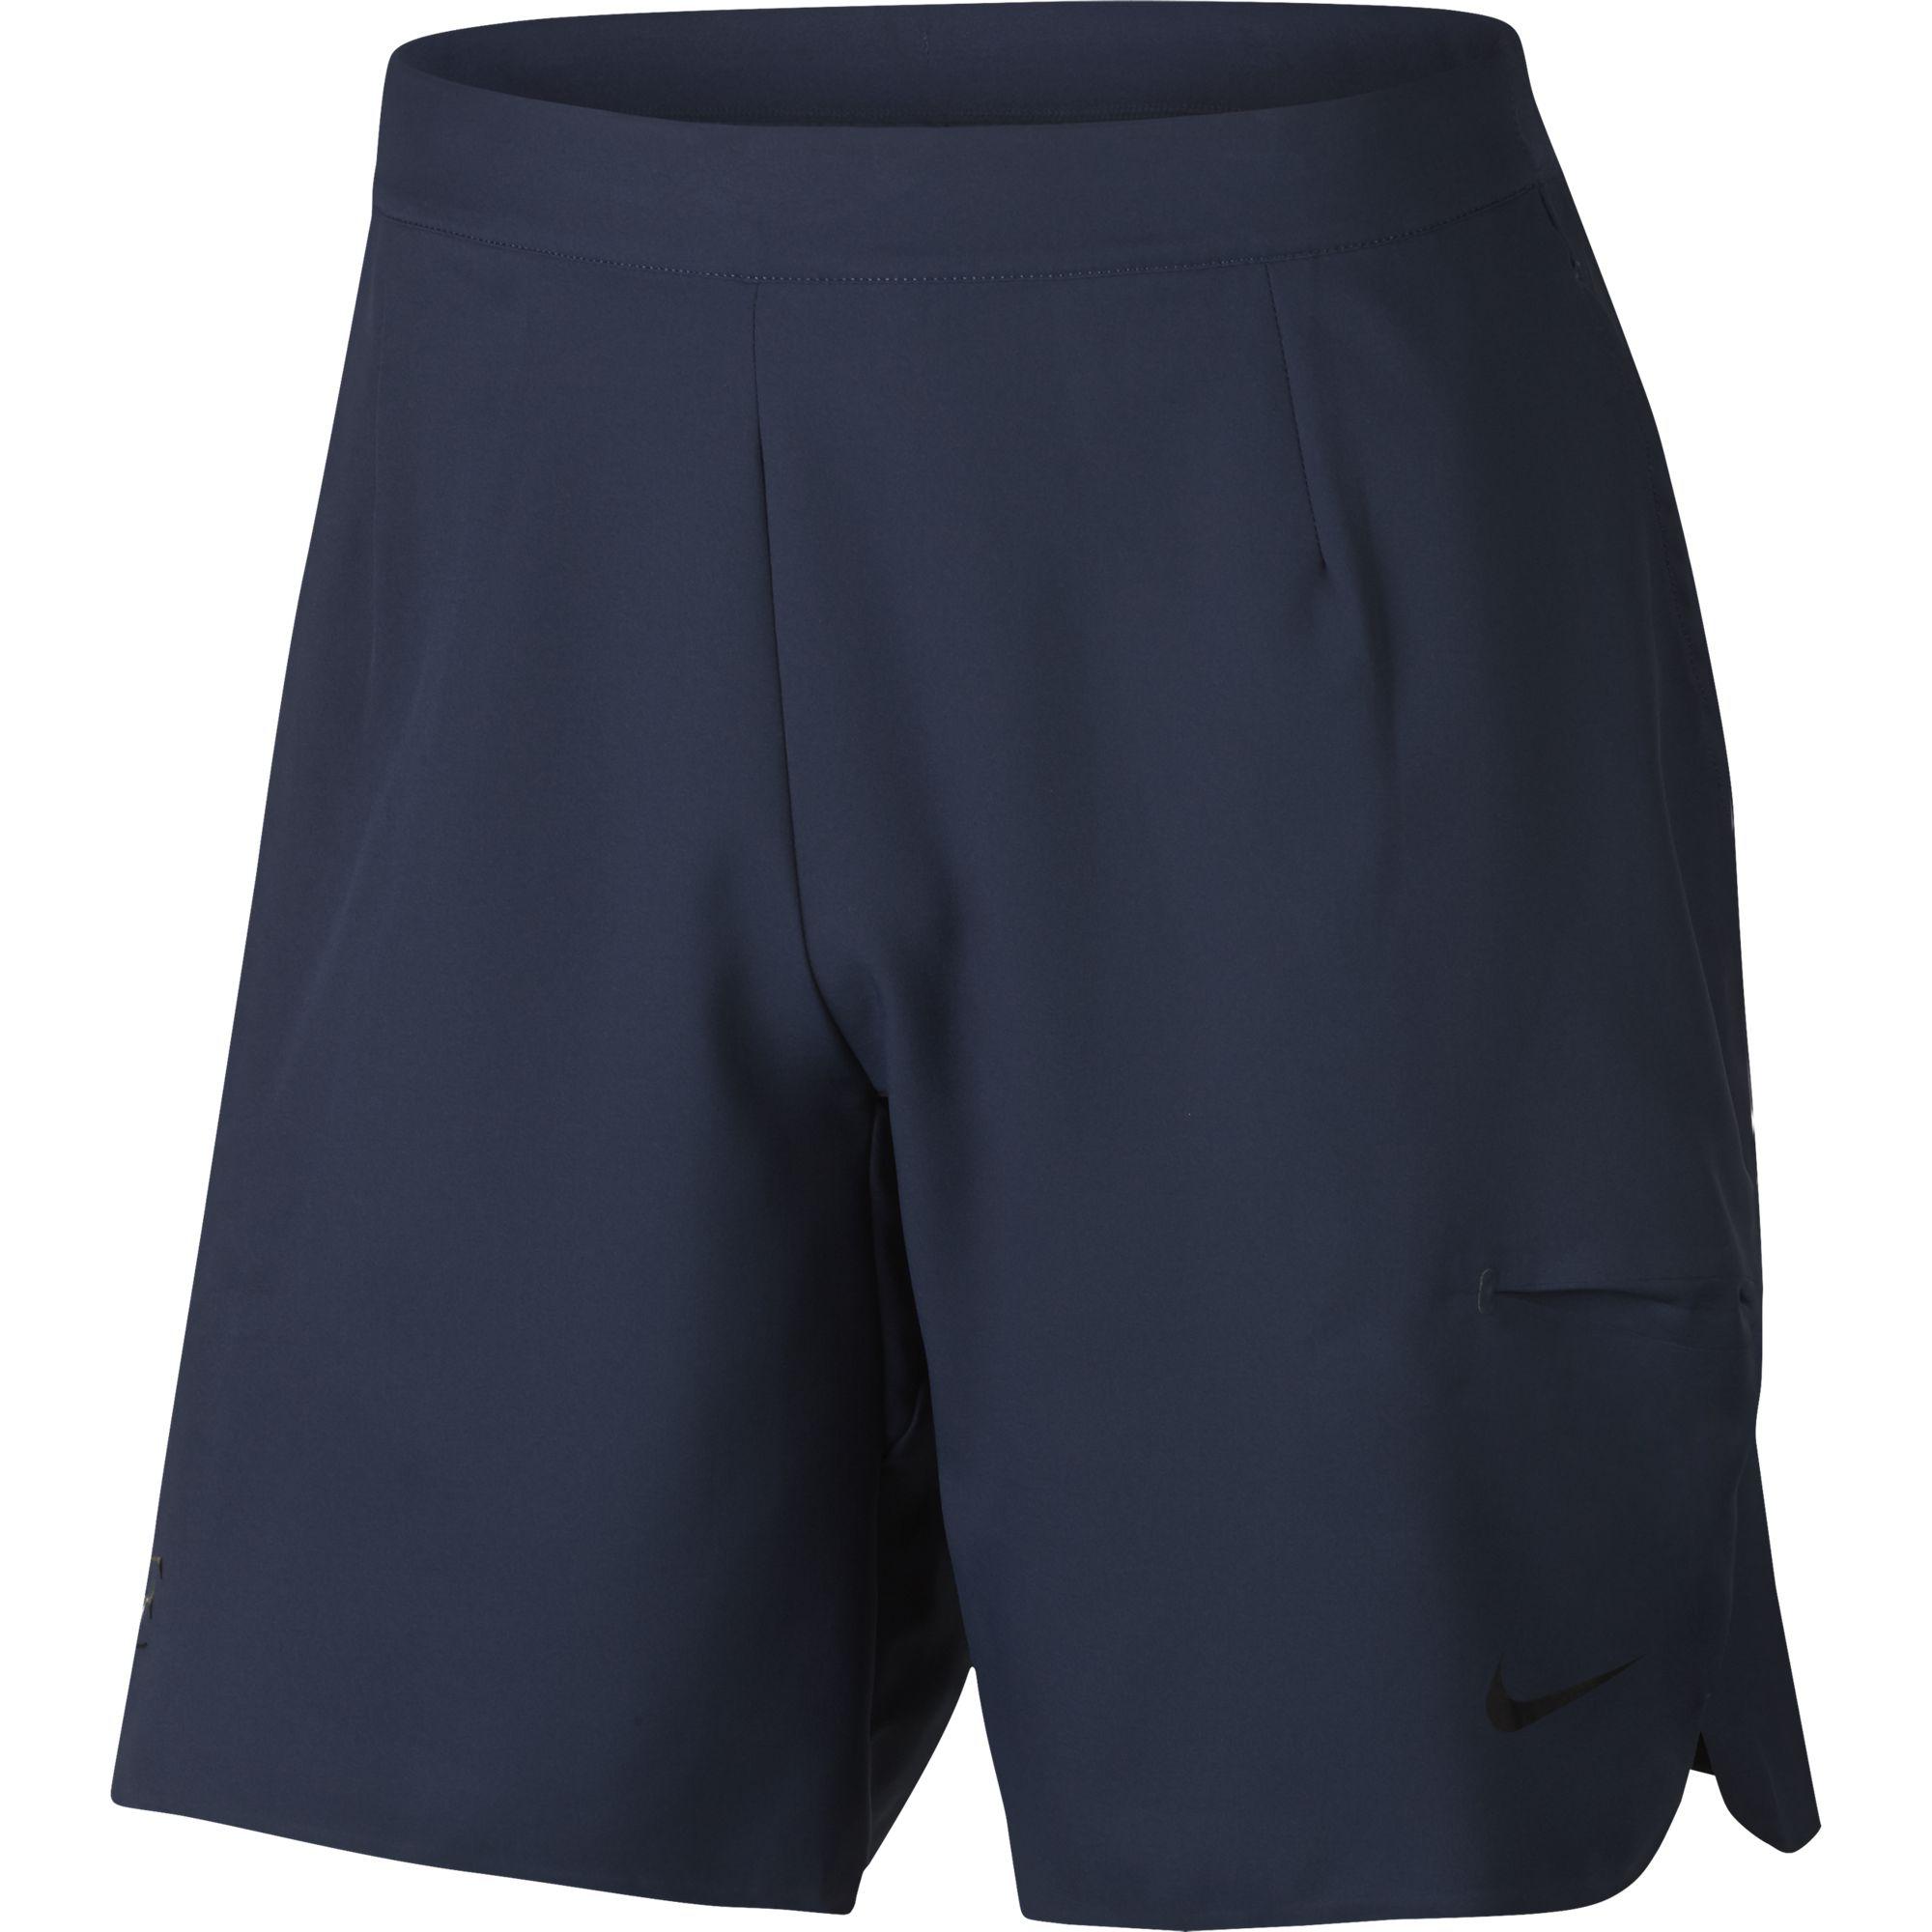 Pledge parity Th Nike Mens Court Flex RF 9 Inch Tennis Shorts - Midnight Navy -  Tennisnuts.com